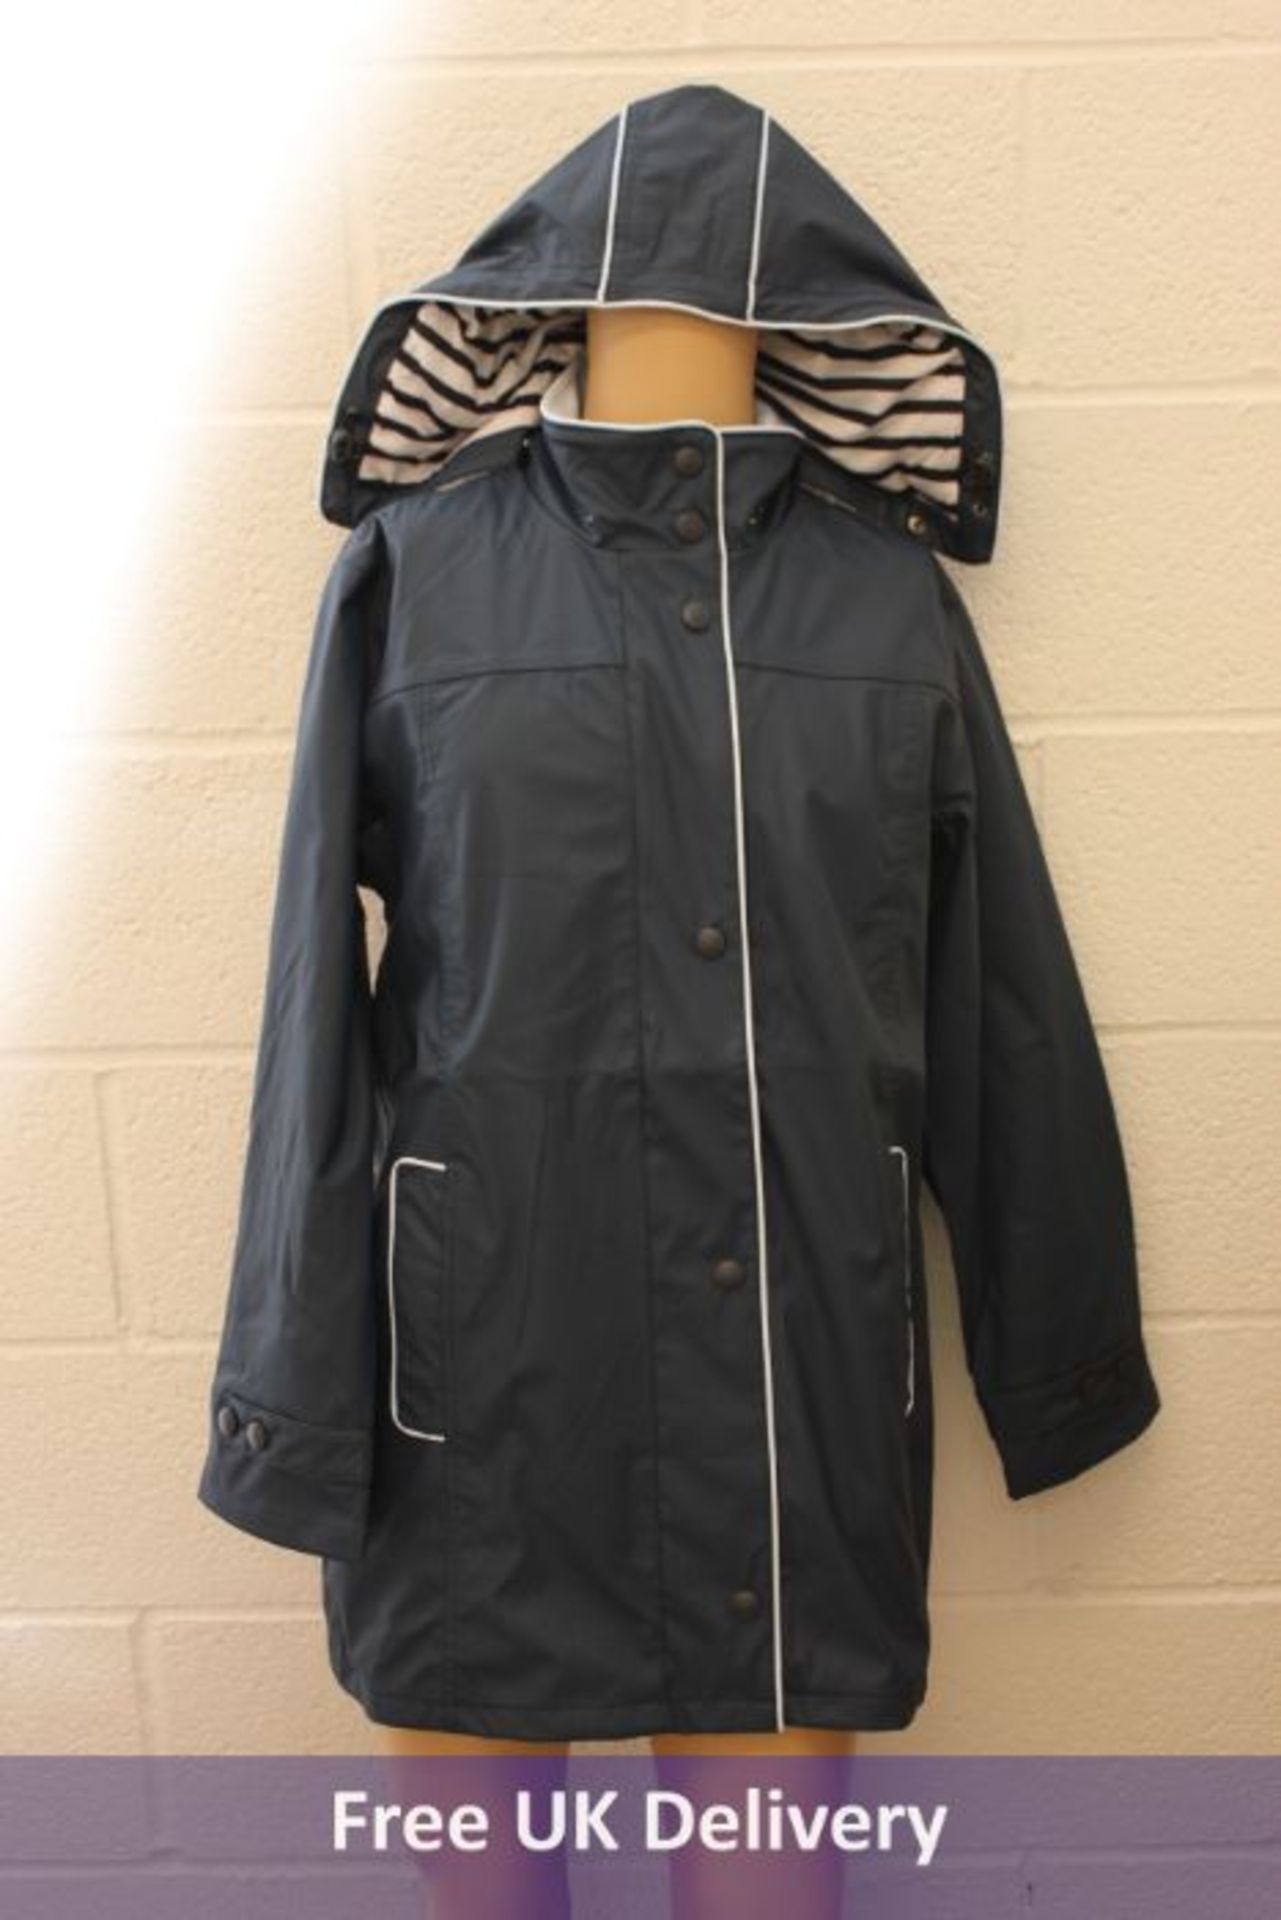 Four Captain Corsaire Women's Regate Ete Waterproof Rain Coat, Navy, to include 2x Size 20 and 2x Si